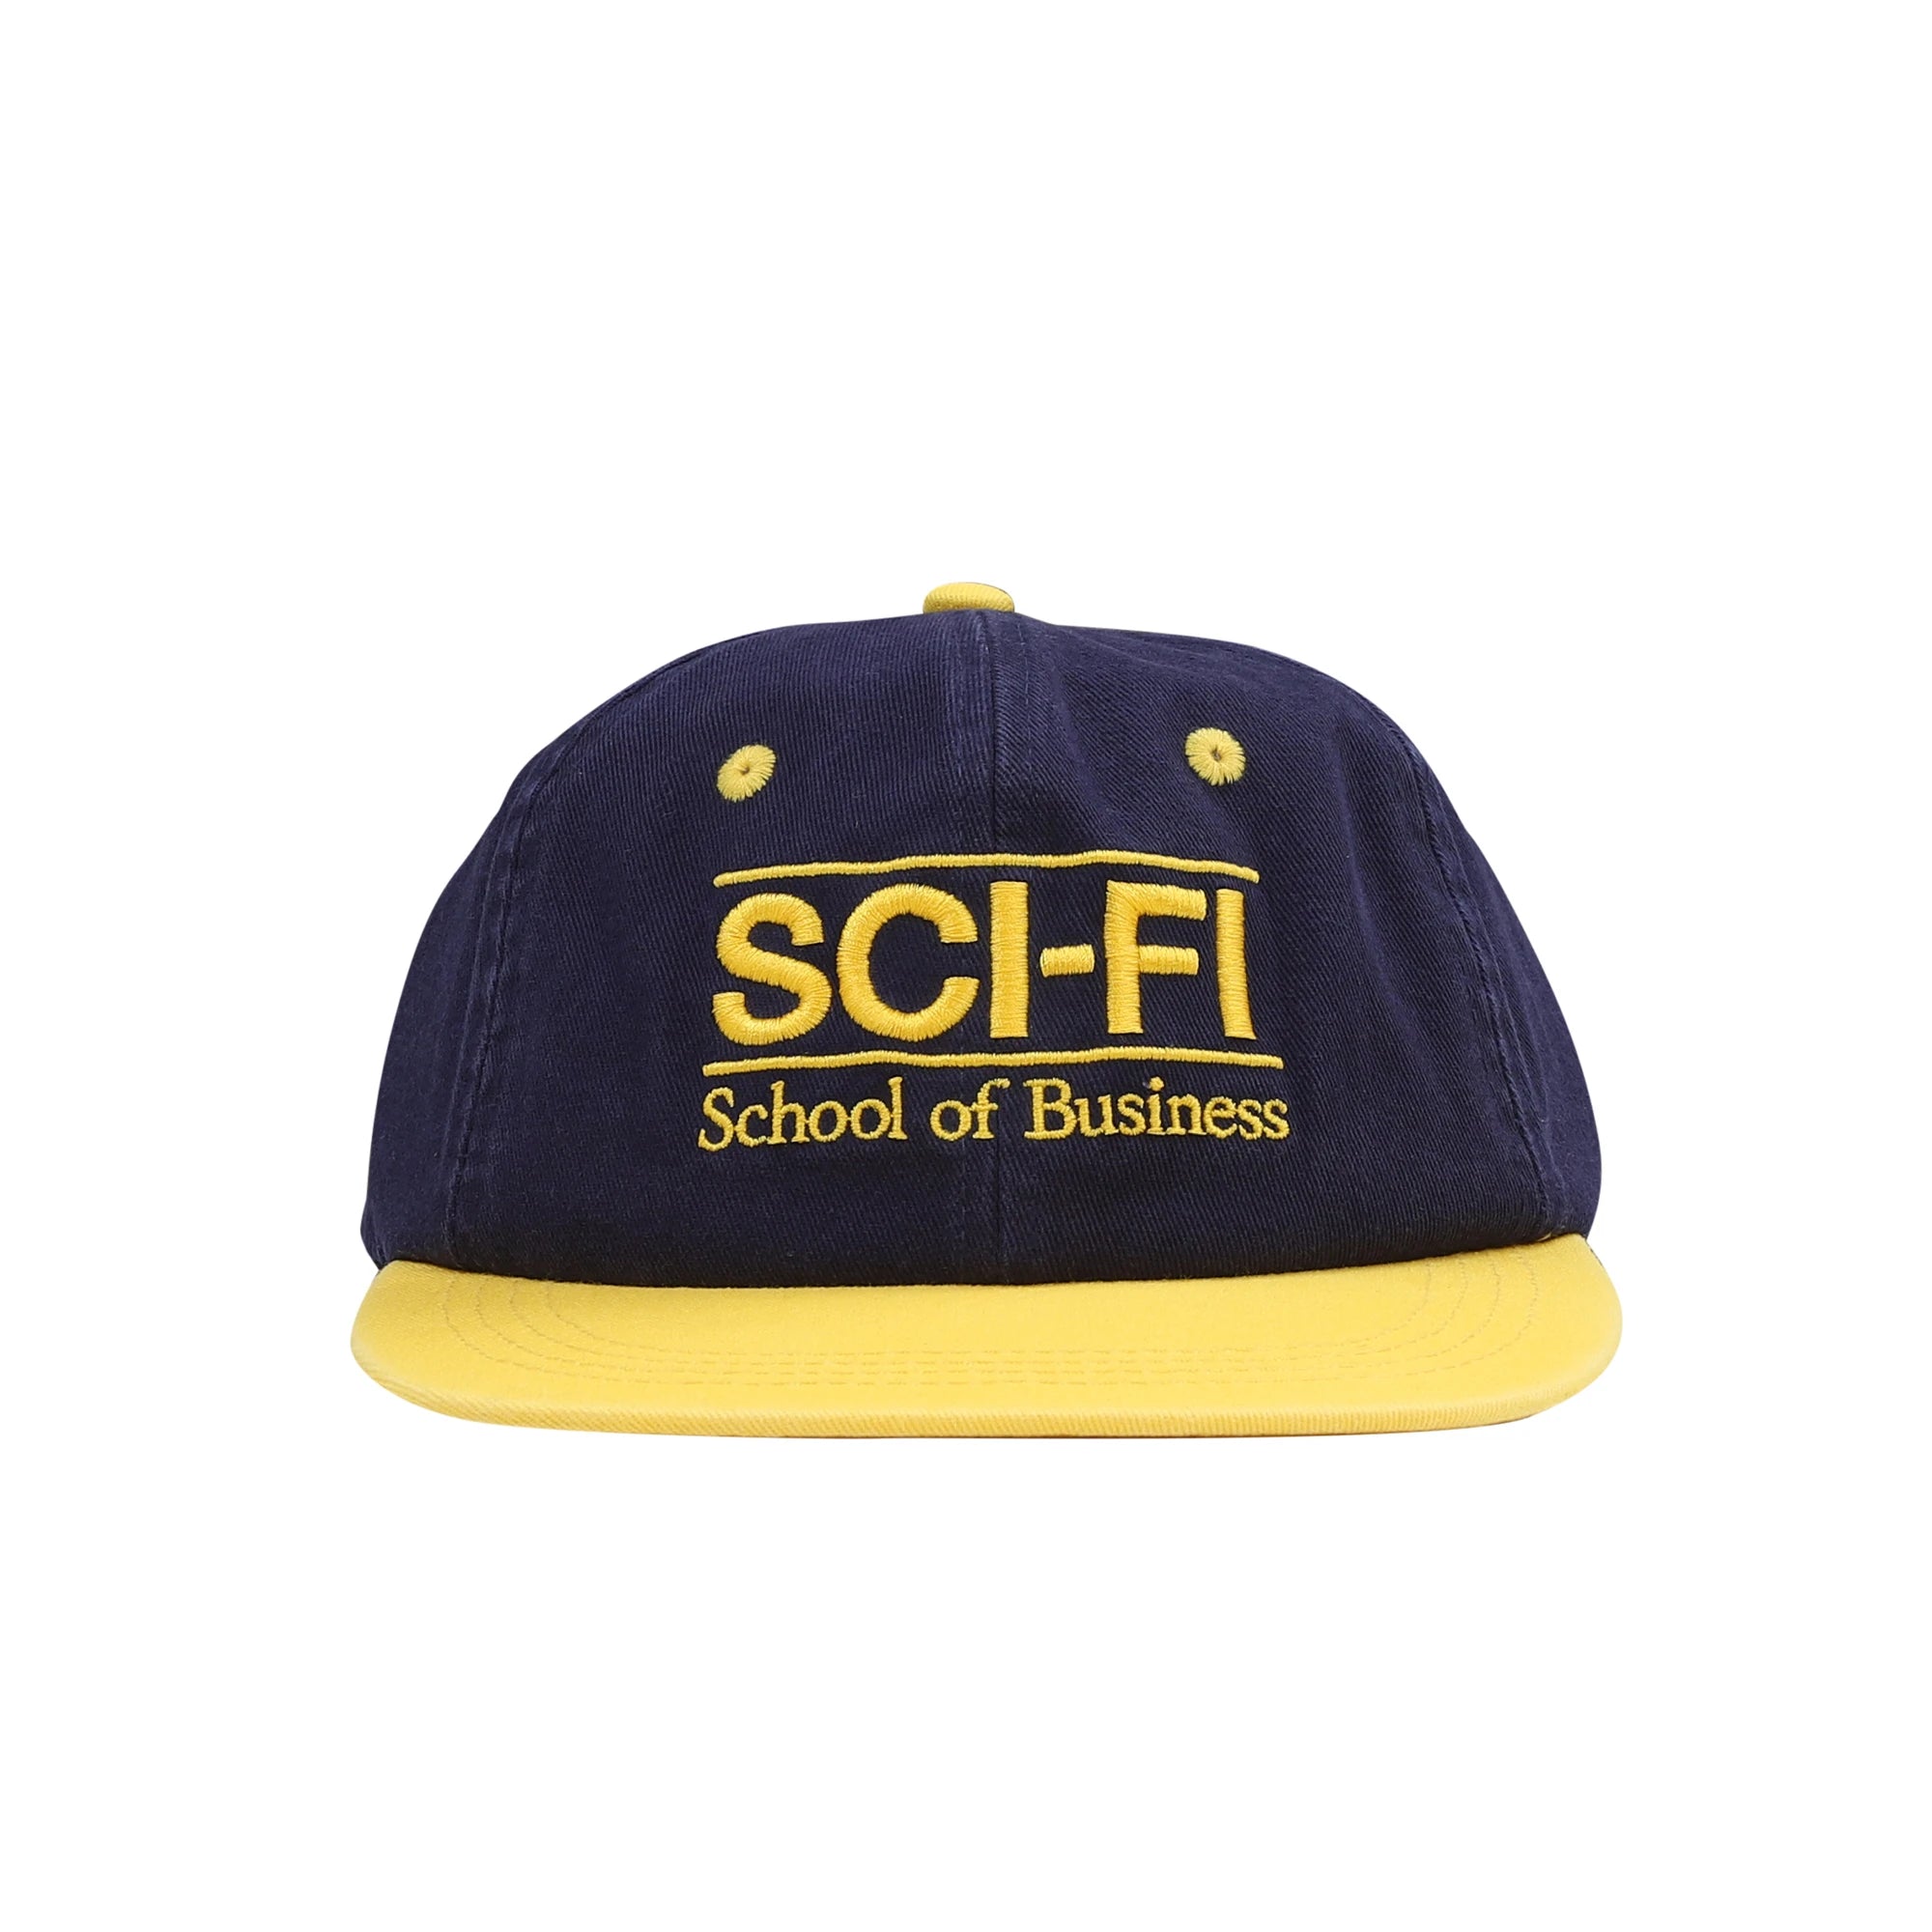 Sci-Fi Fantasy School of Business Hat -Navy/Yellow